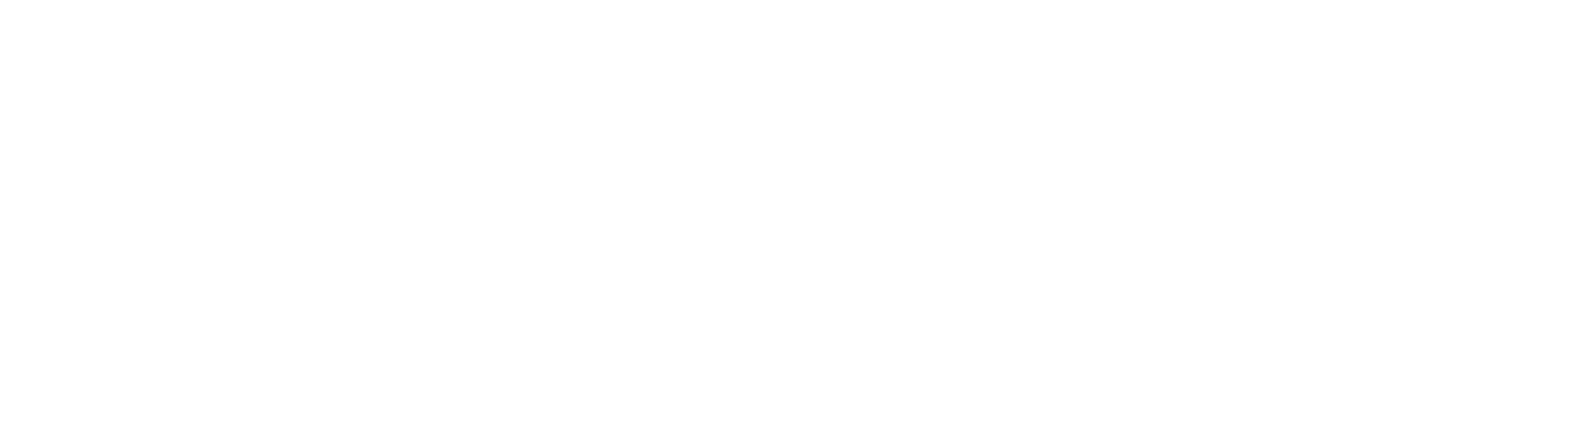 Focus Financial Partners
 logo large for dark backgrounds (transparent PNG)